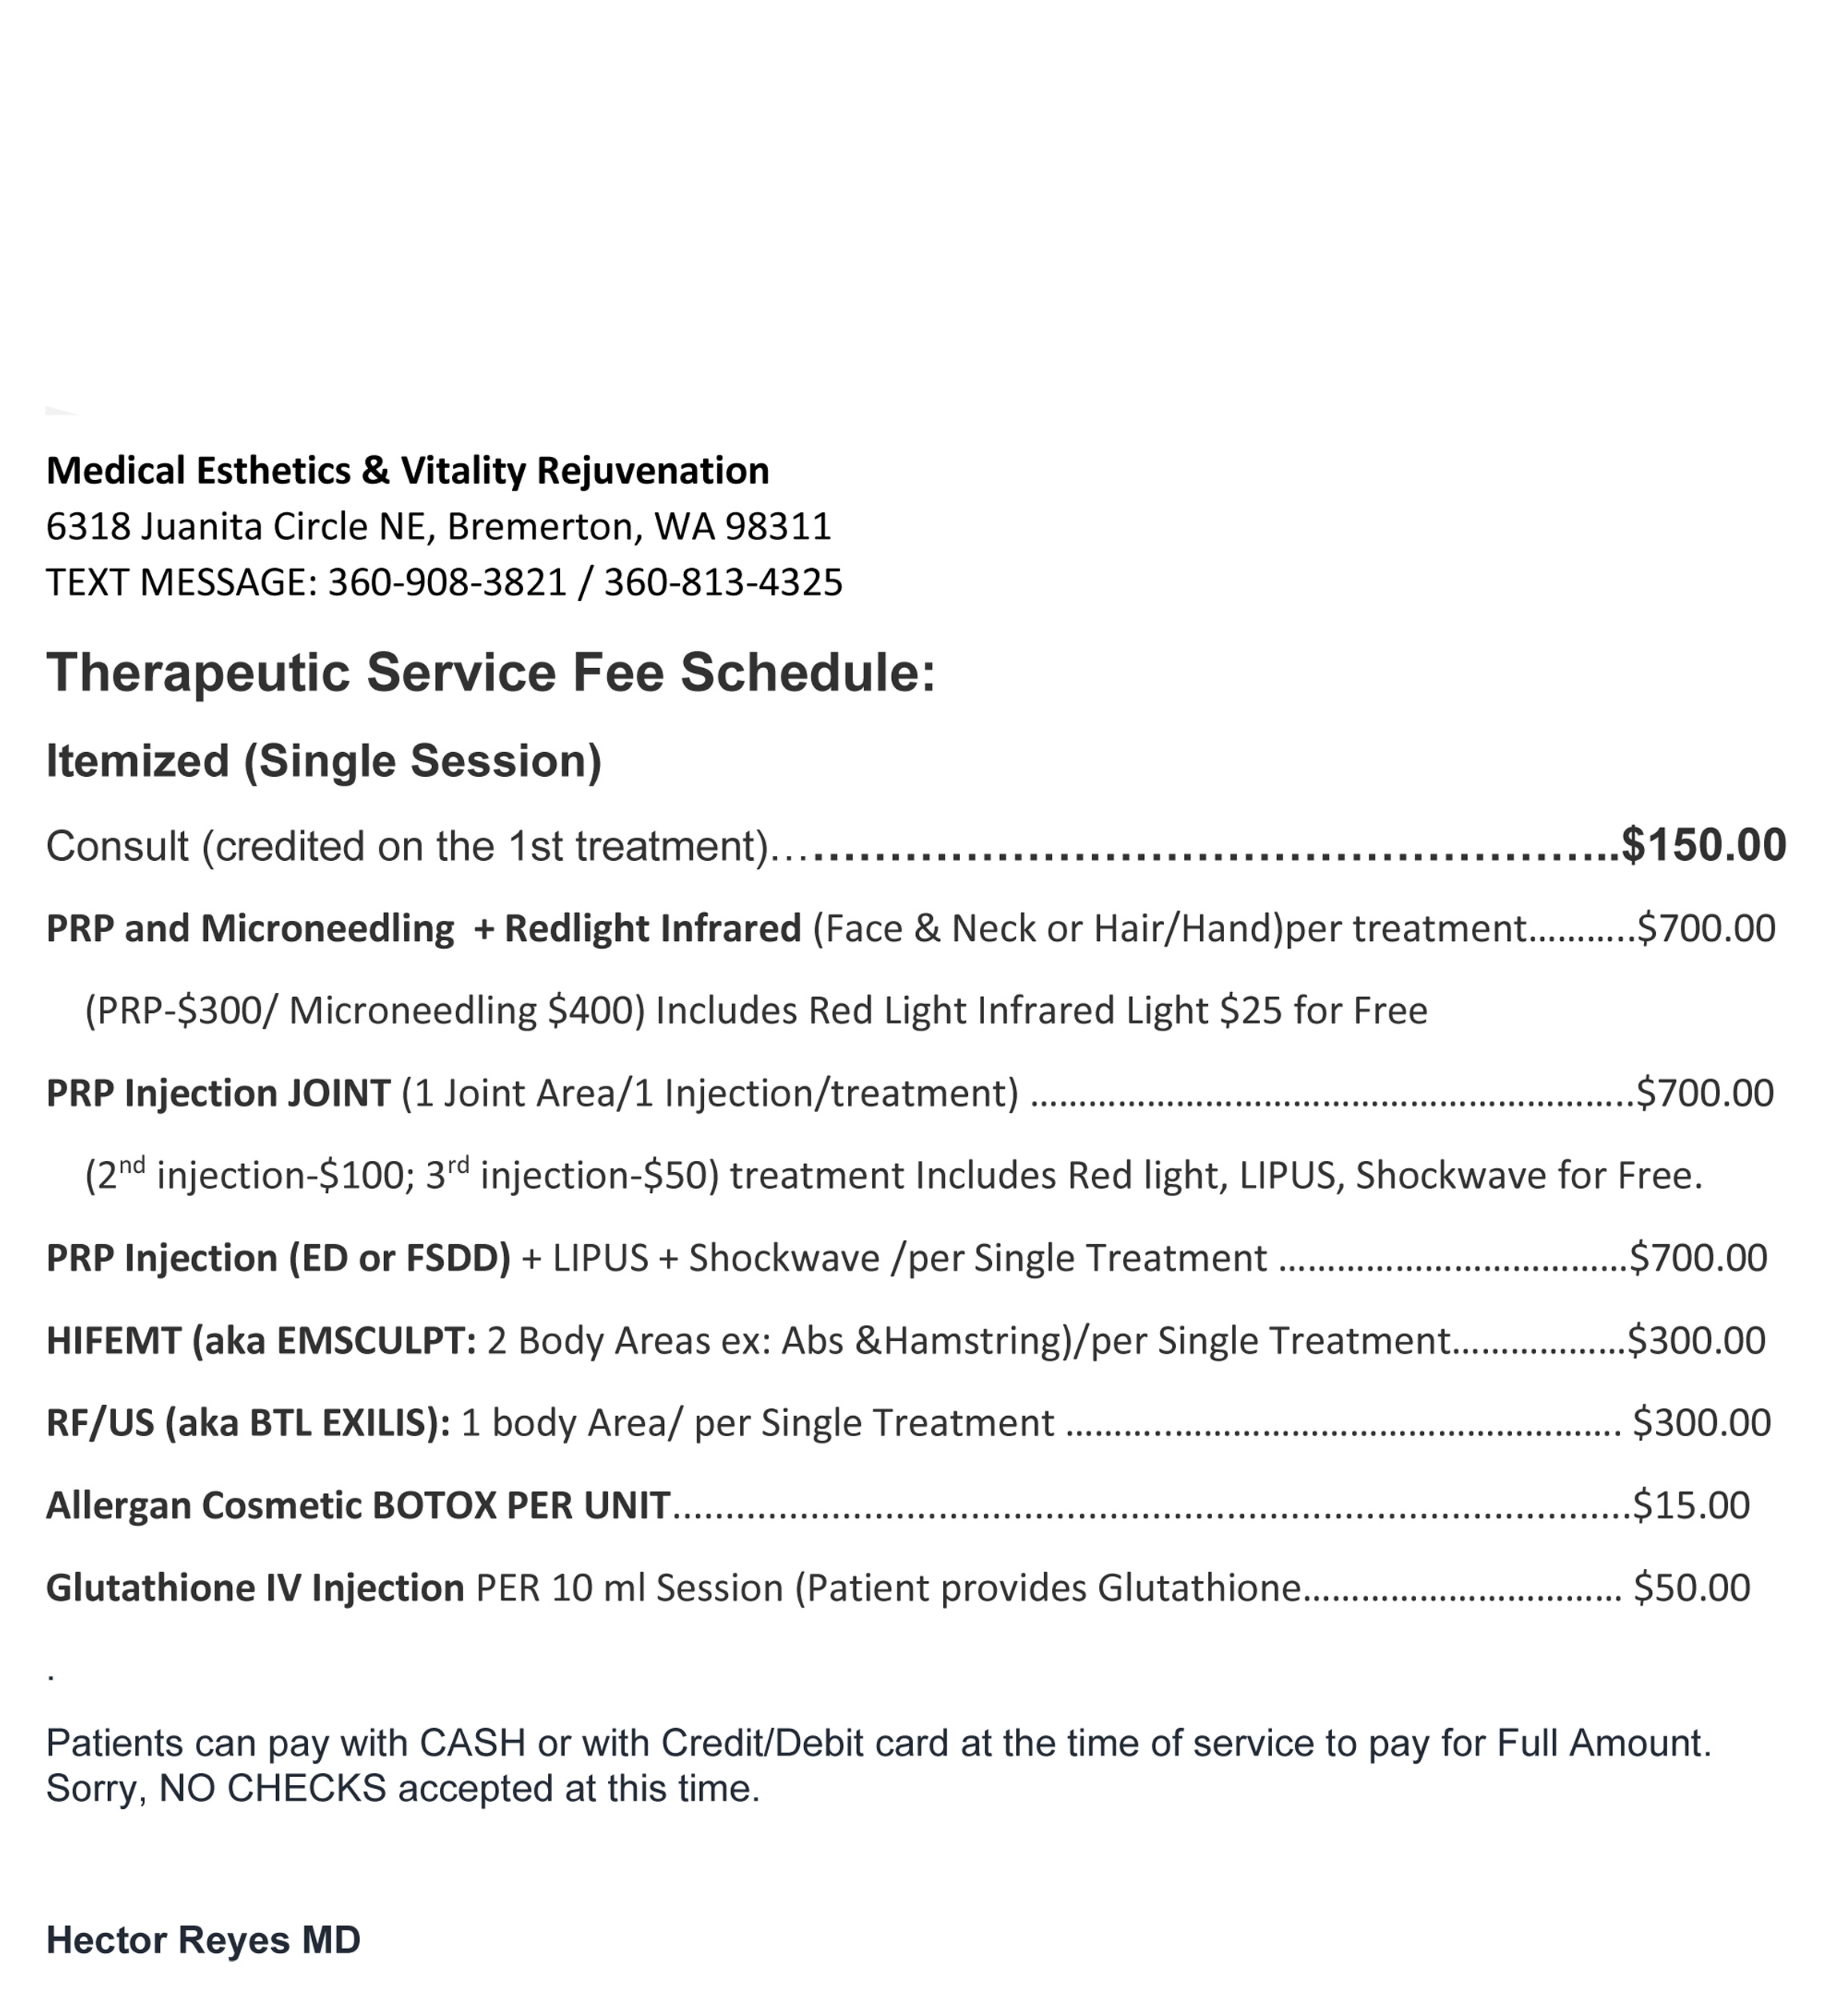 Therapeutic Service Fee Schedule: